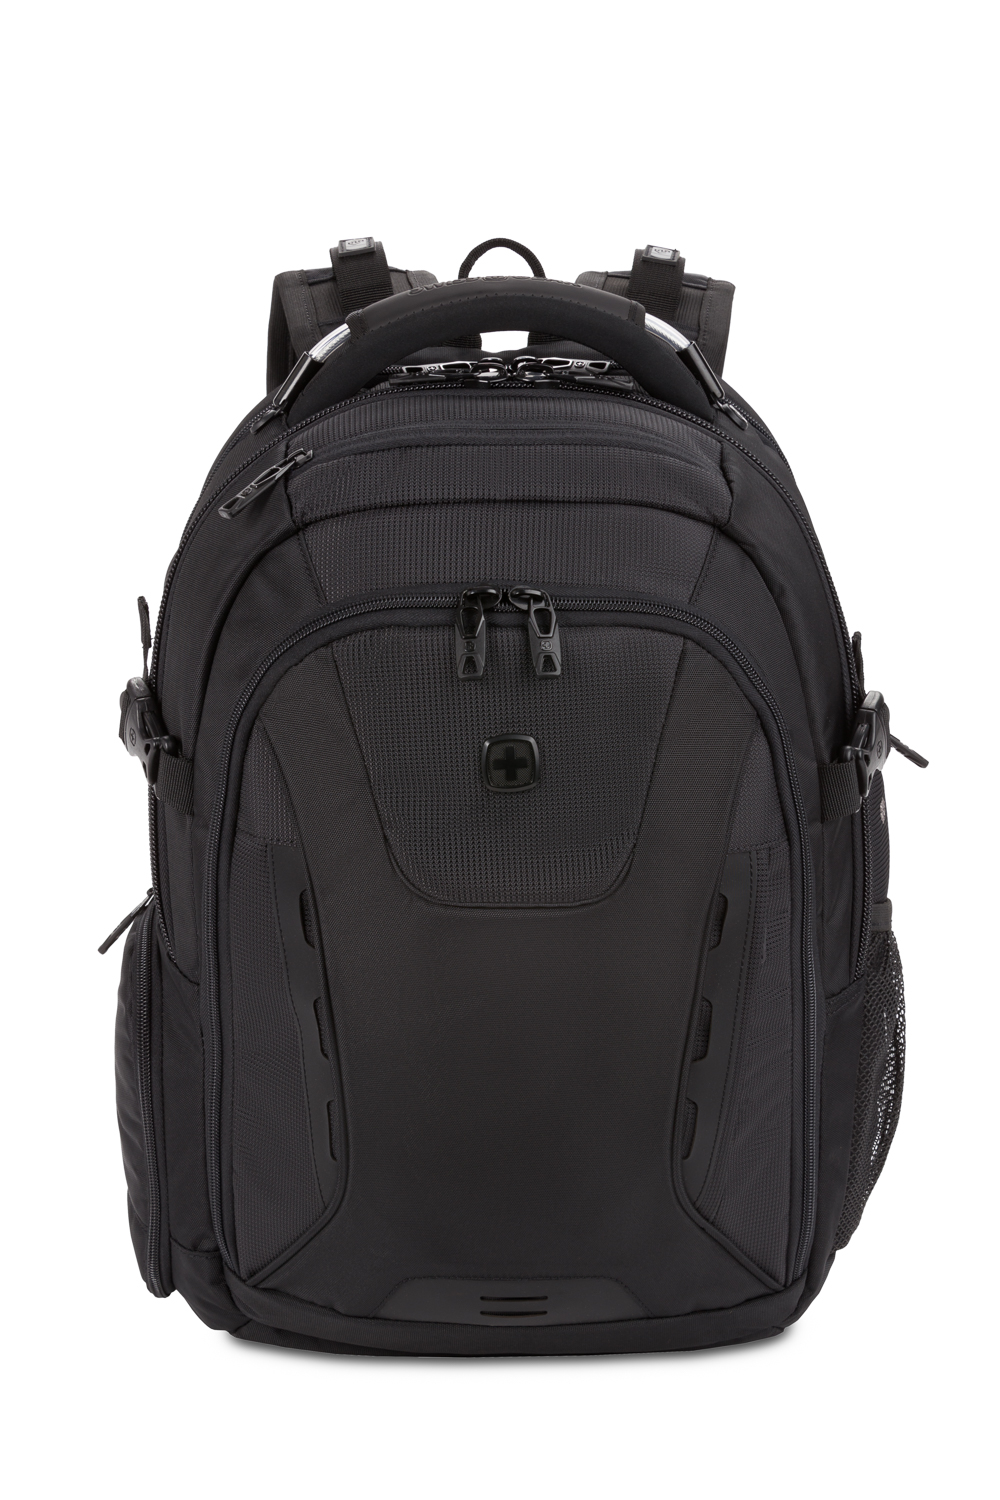 SwissGear Backpack Laptop Travel Backpack ScanSmart Monochrome Black SA2762 